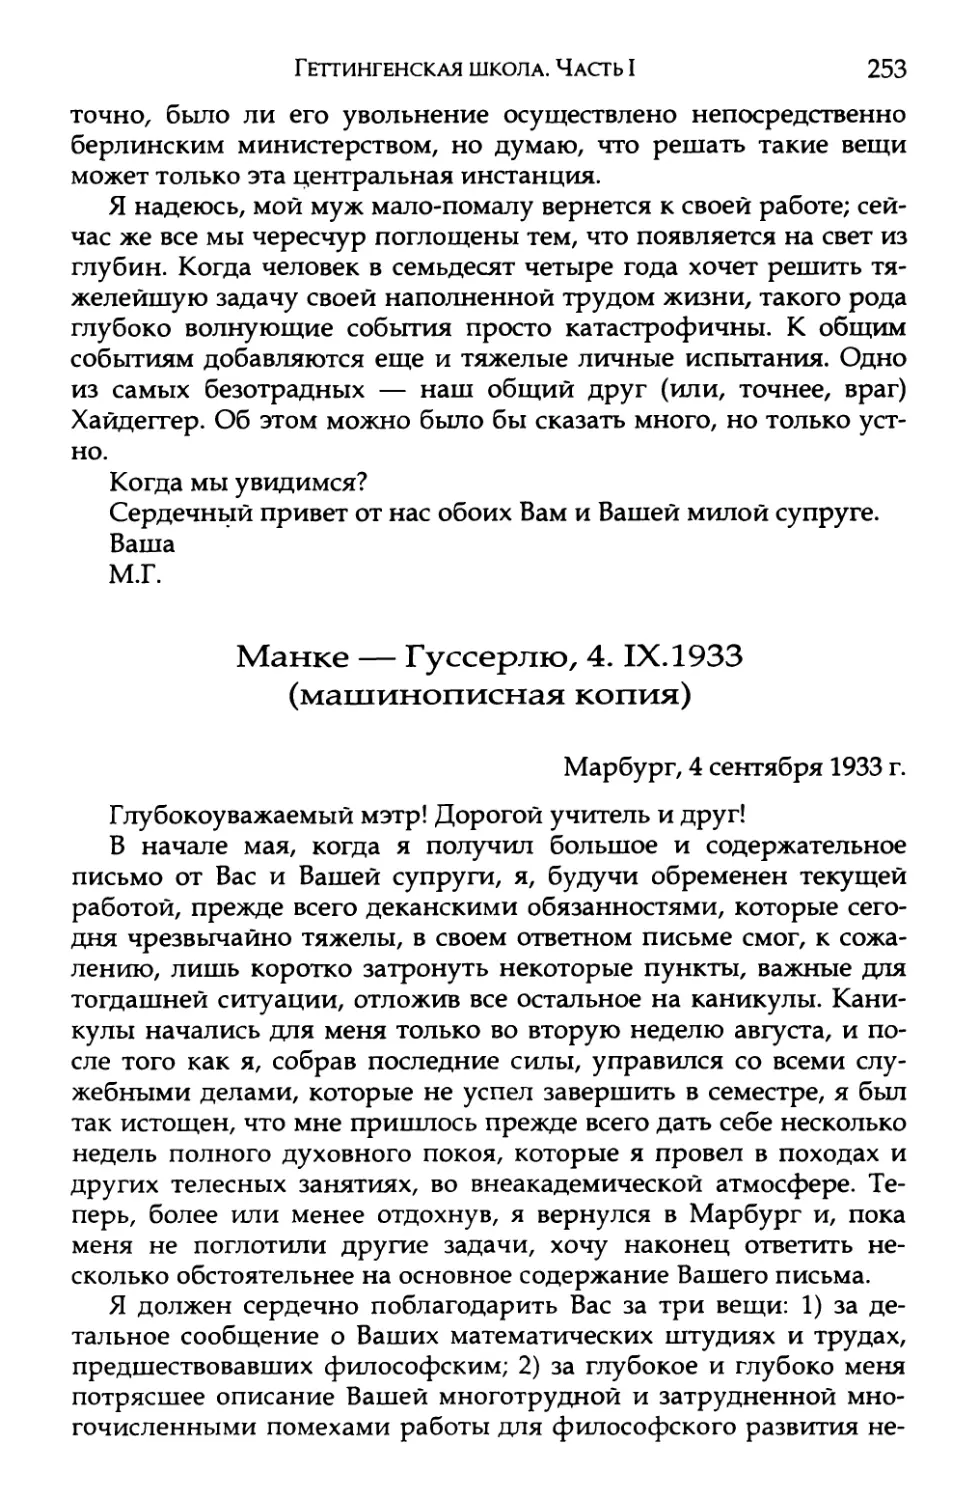 Манке — Гуссерлю, 4. IX. 1933. Перевод Е. В. Борисова